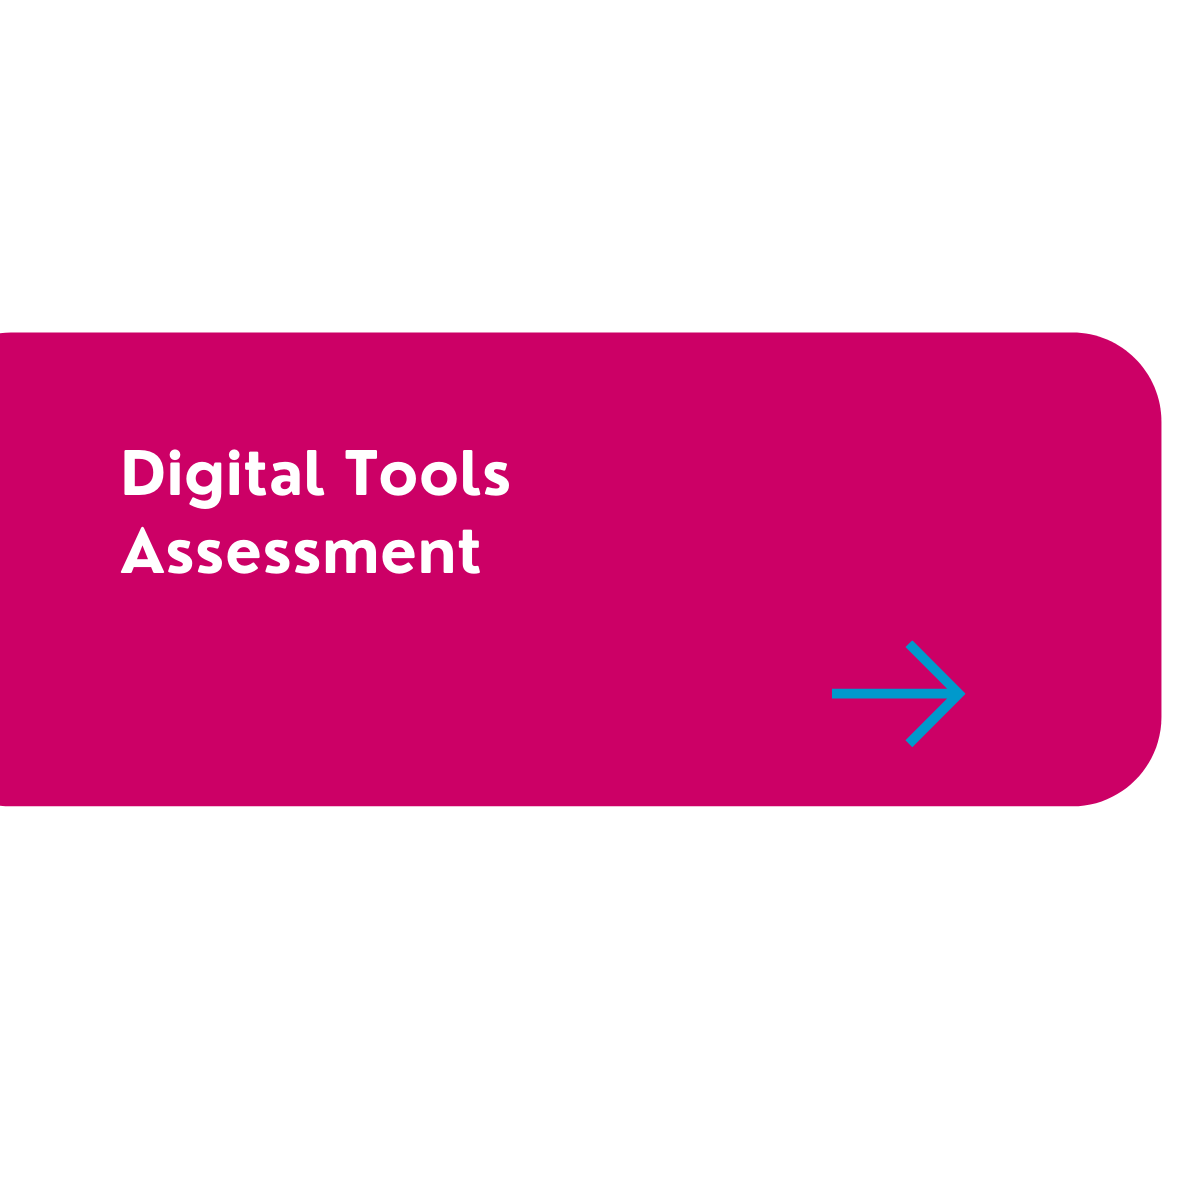 Digital Tools Assessment